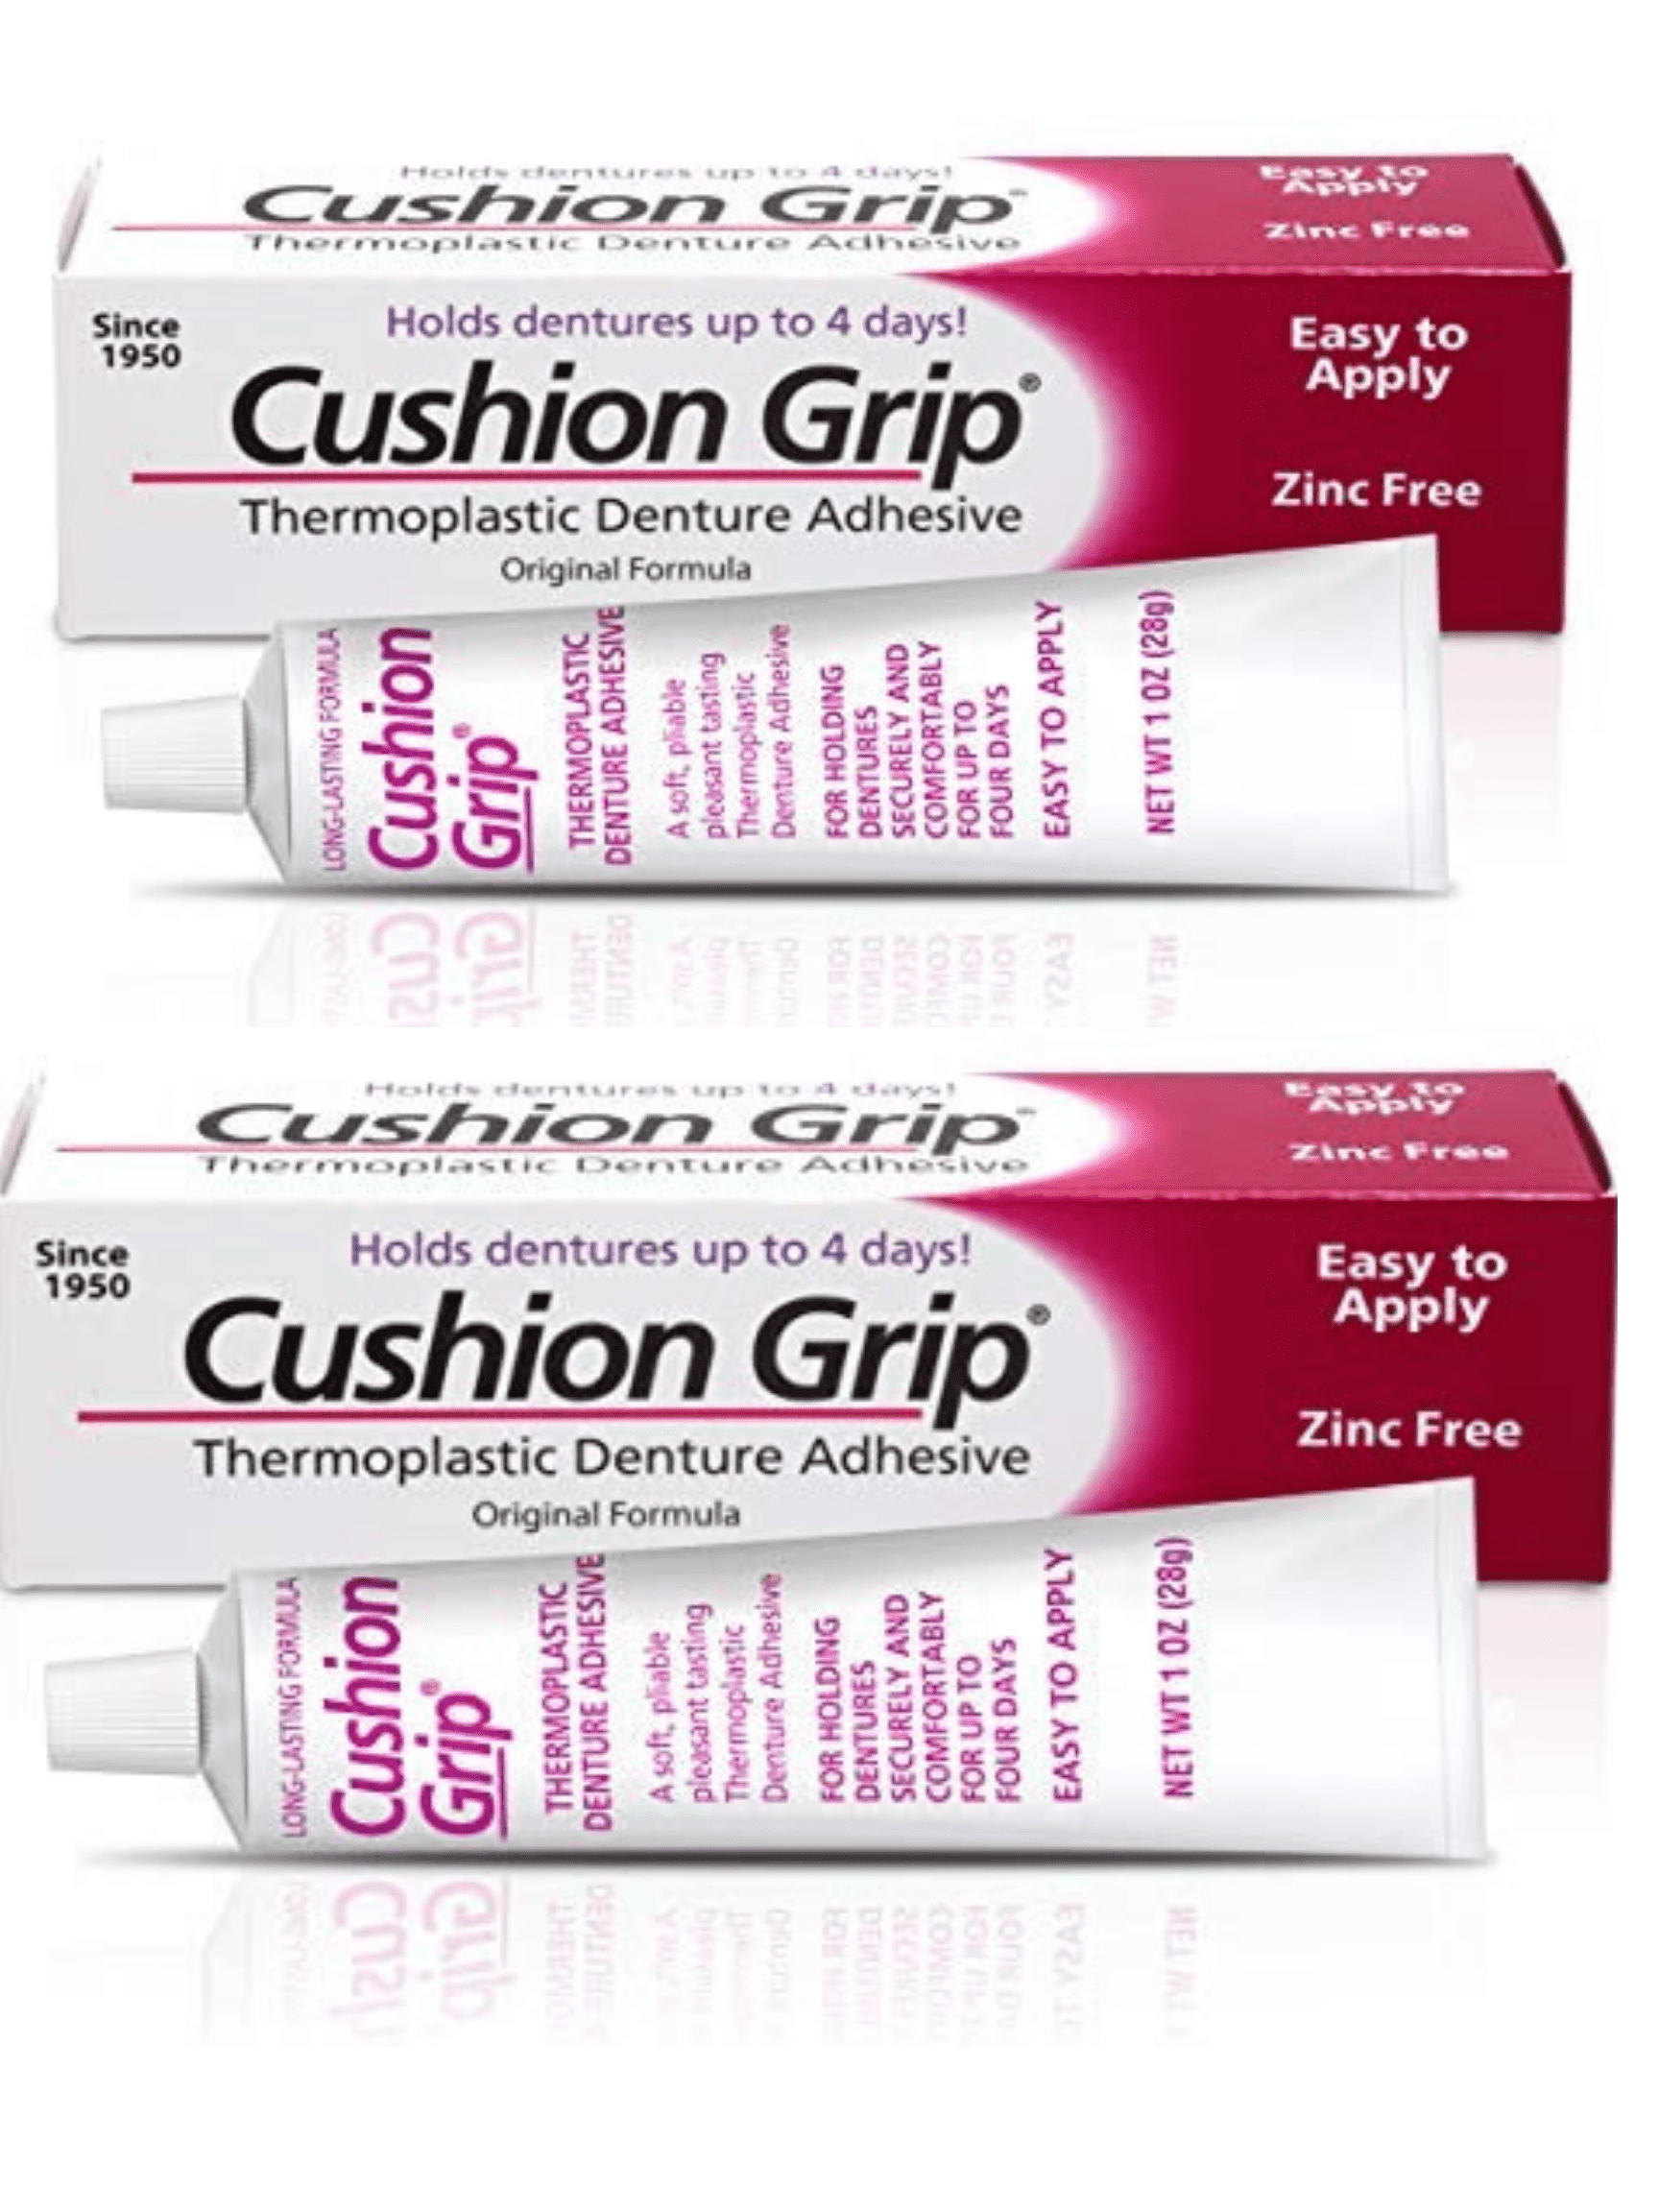 NEW Cushion Grip Tru-Stay Denture Adhesive Cream 1 oz FREE